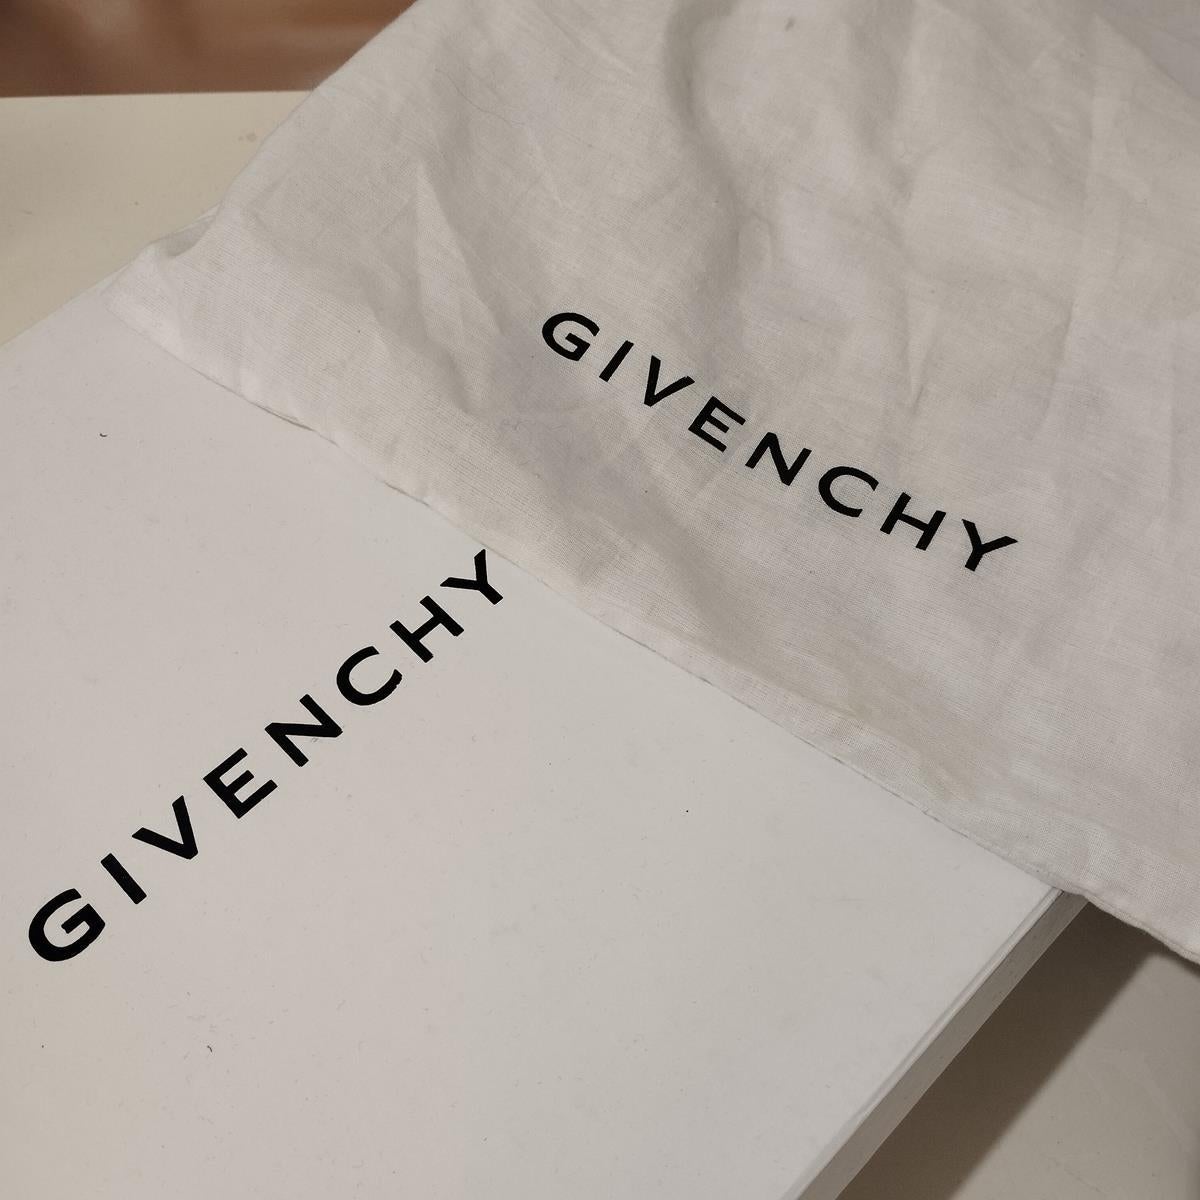 Givenchy 